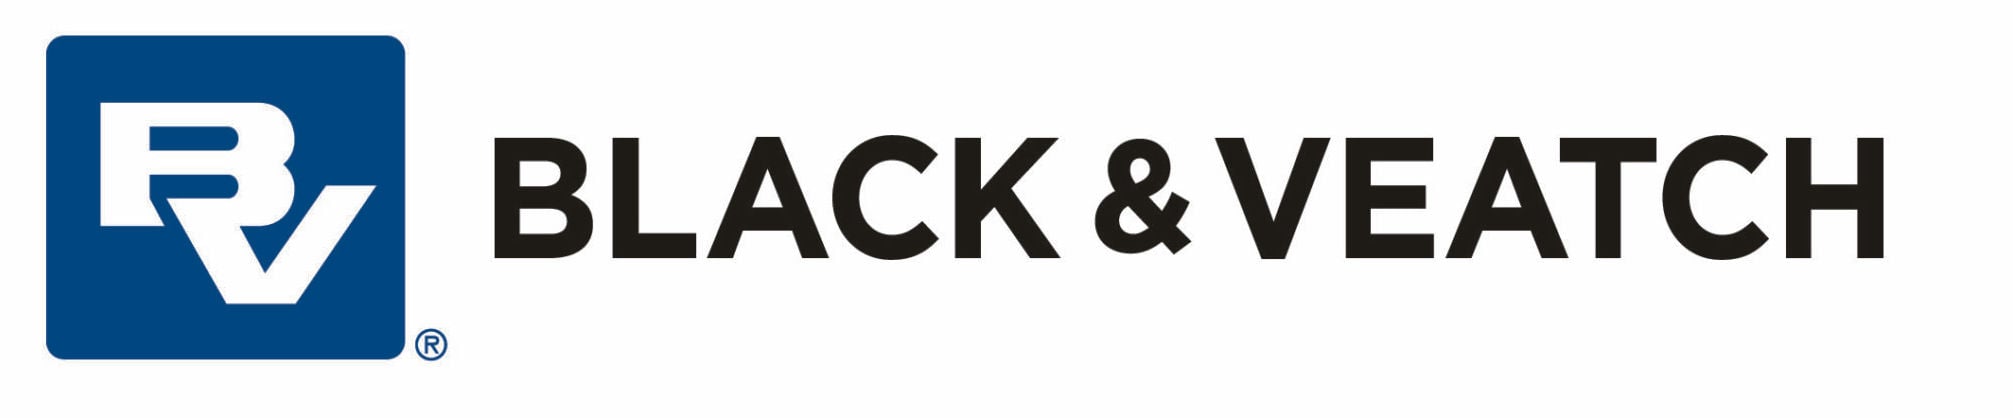 Black Veatch Logo.jpg